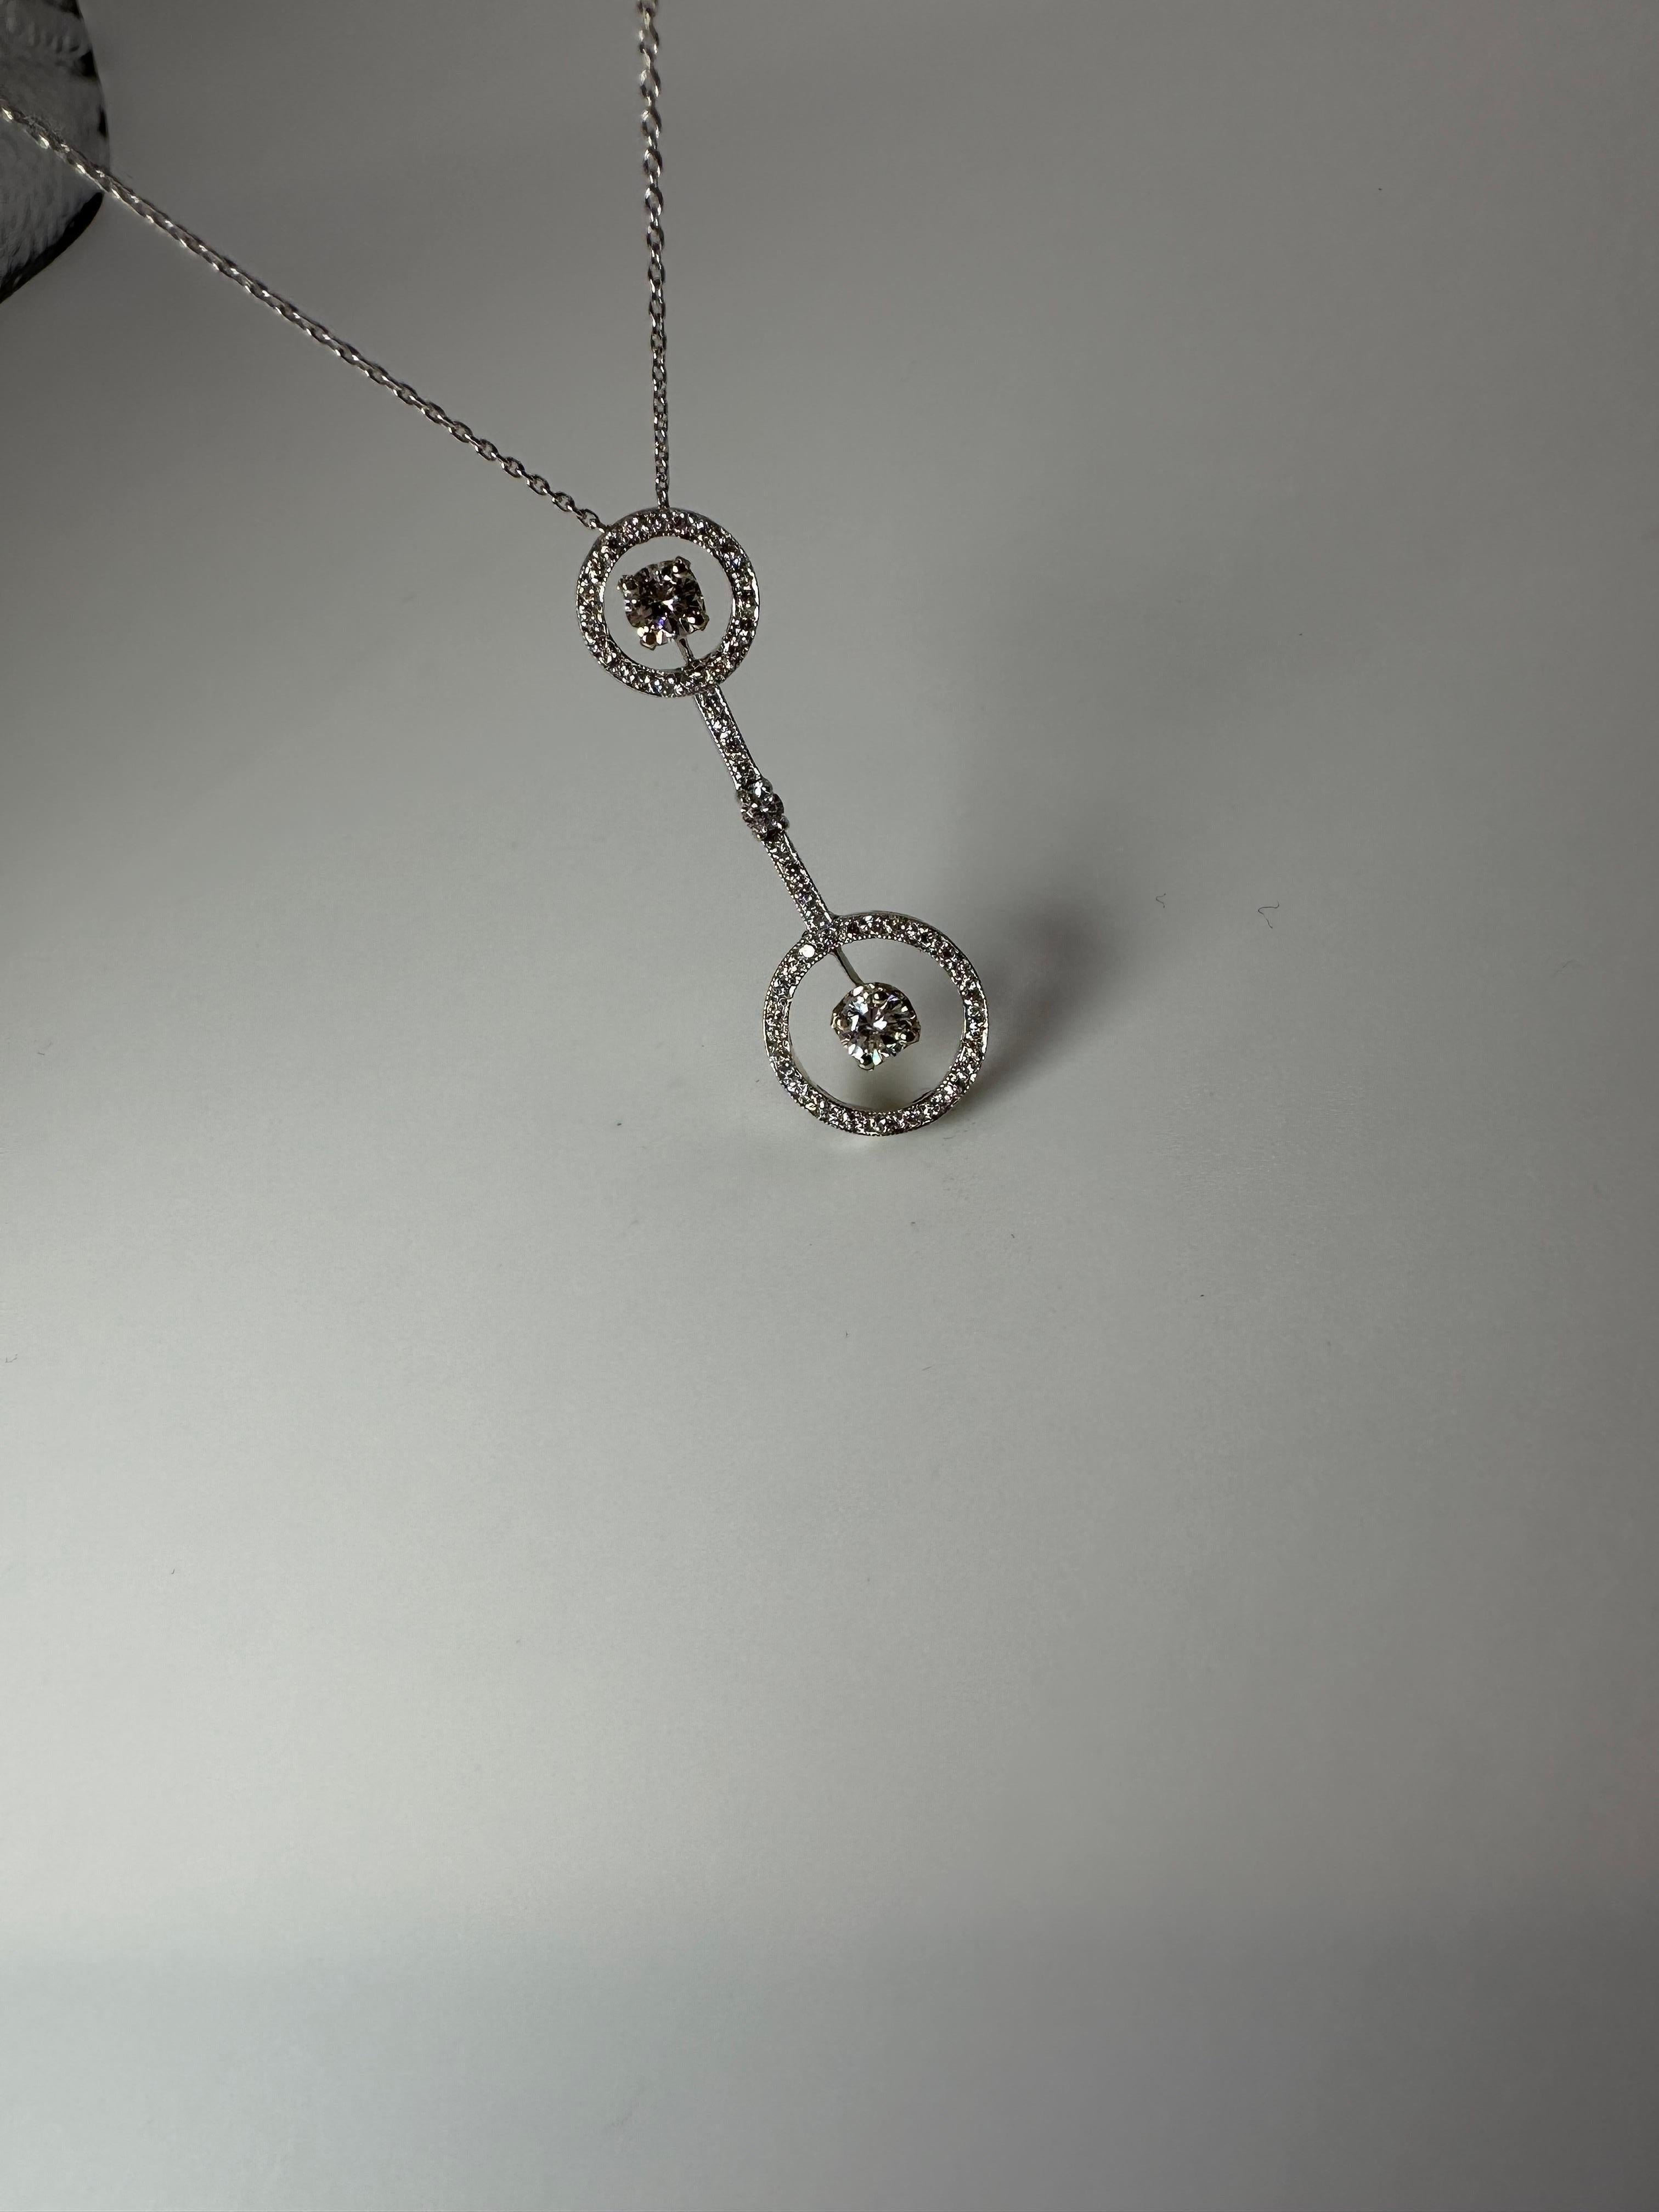 Brilliant Cut Modern Diamond Pendant Necklace Long 18 Karat White Gold For Sale